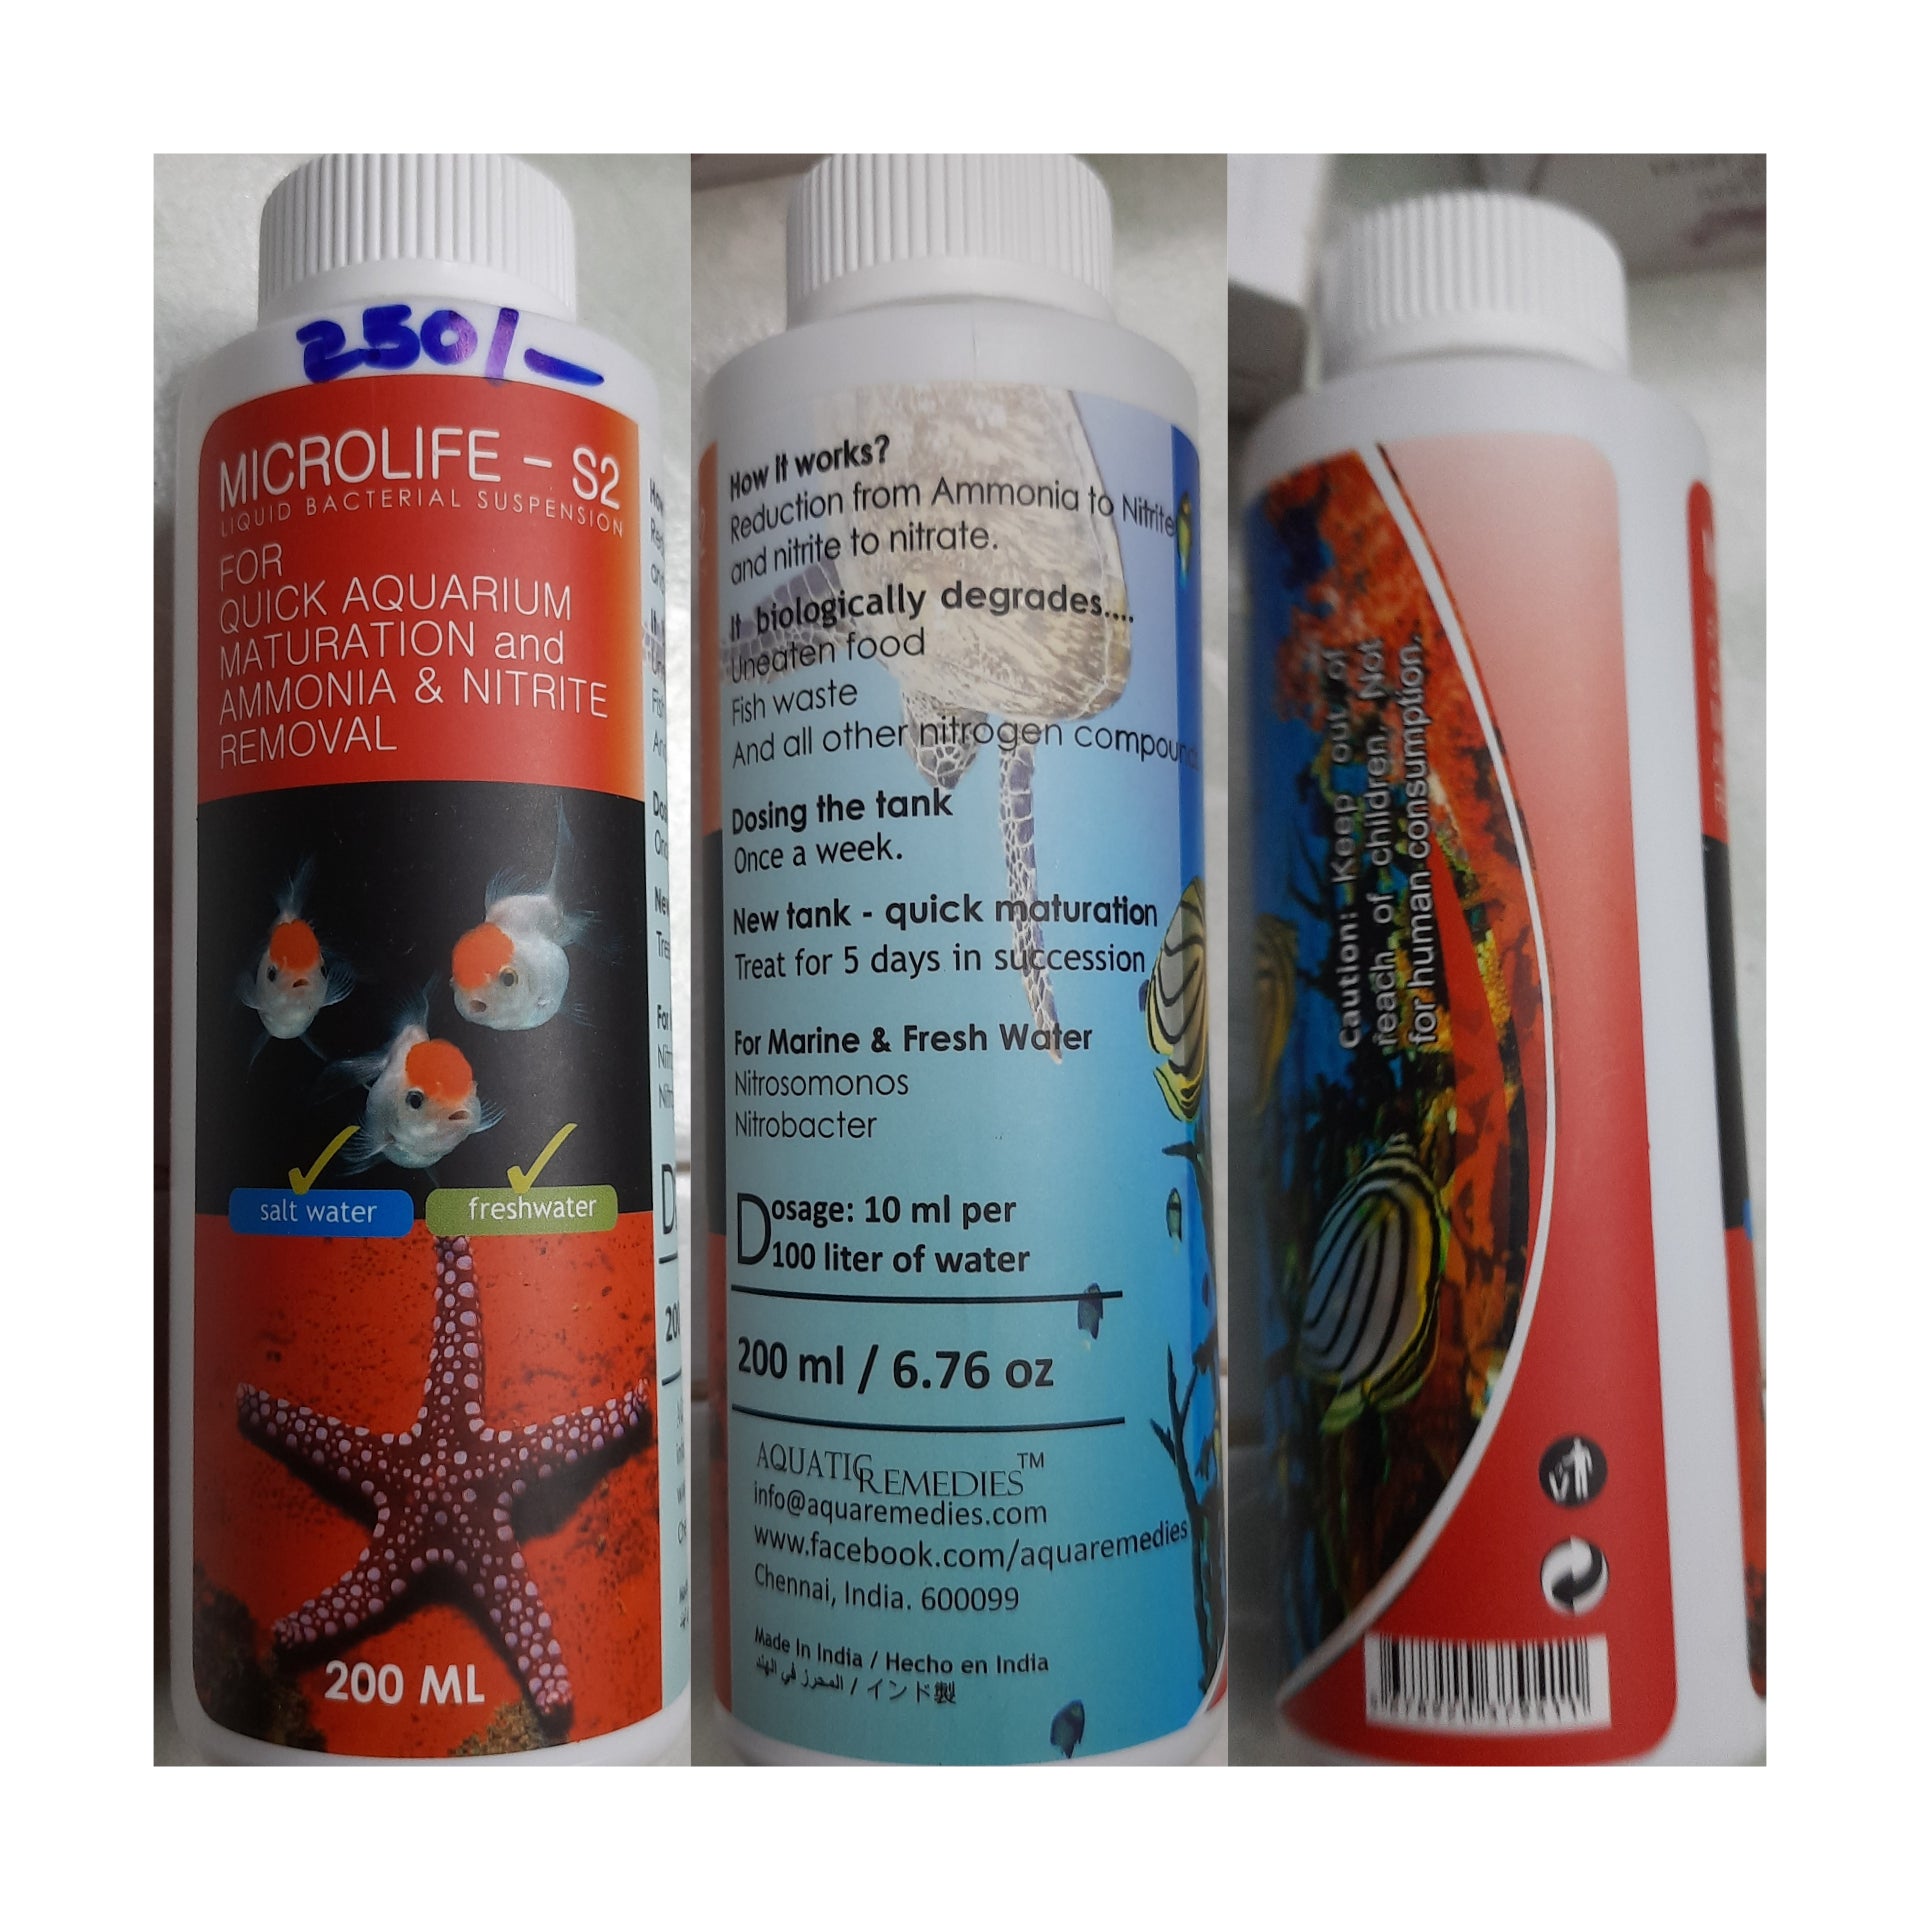 Microlife S2 200 ml (For Quick Aquarium Maturation) - Aquatic Remedies Product